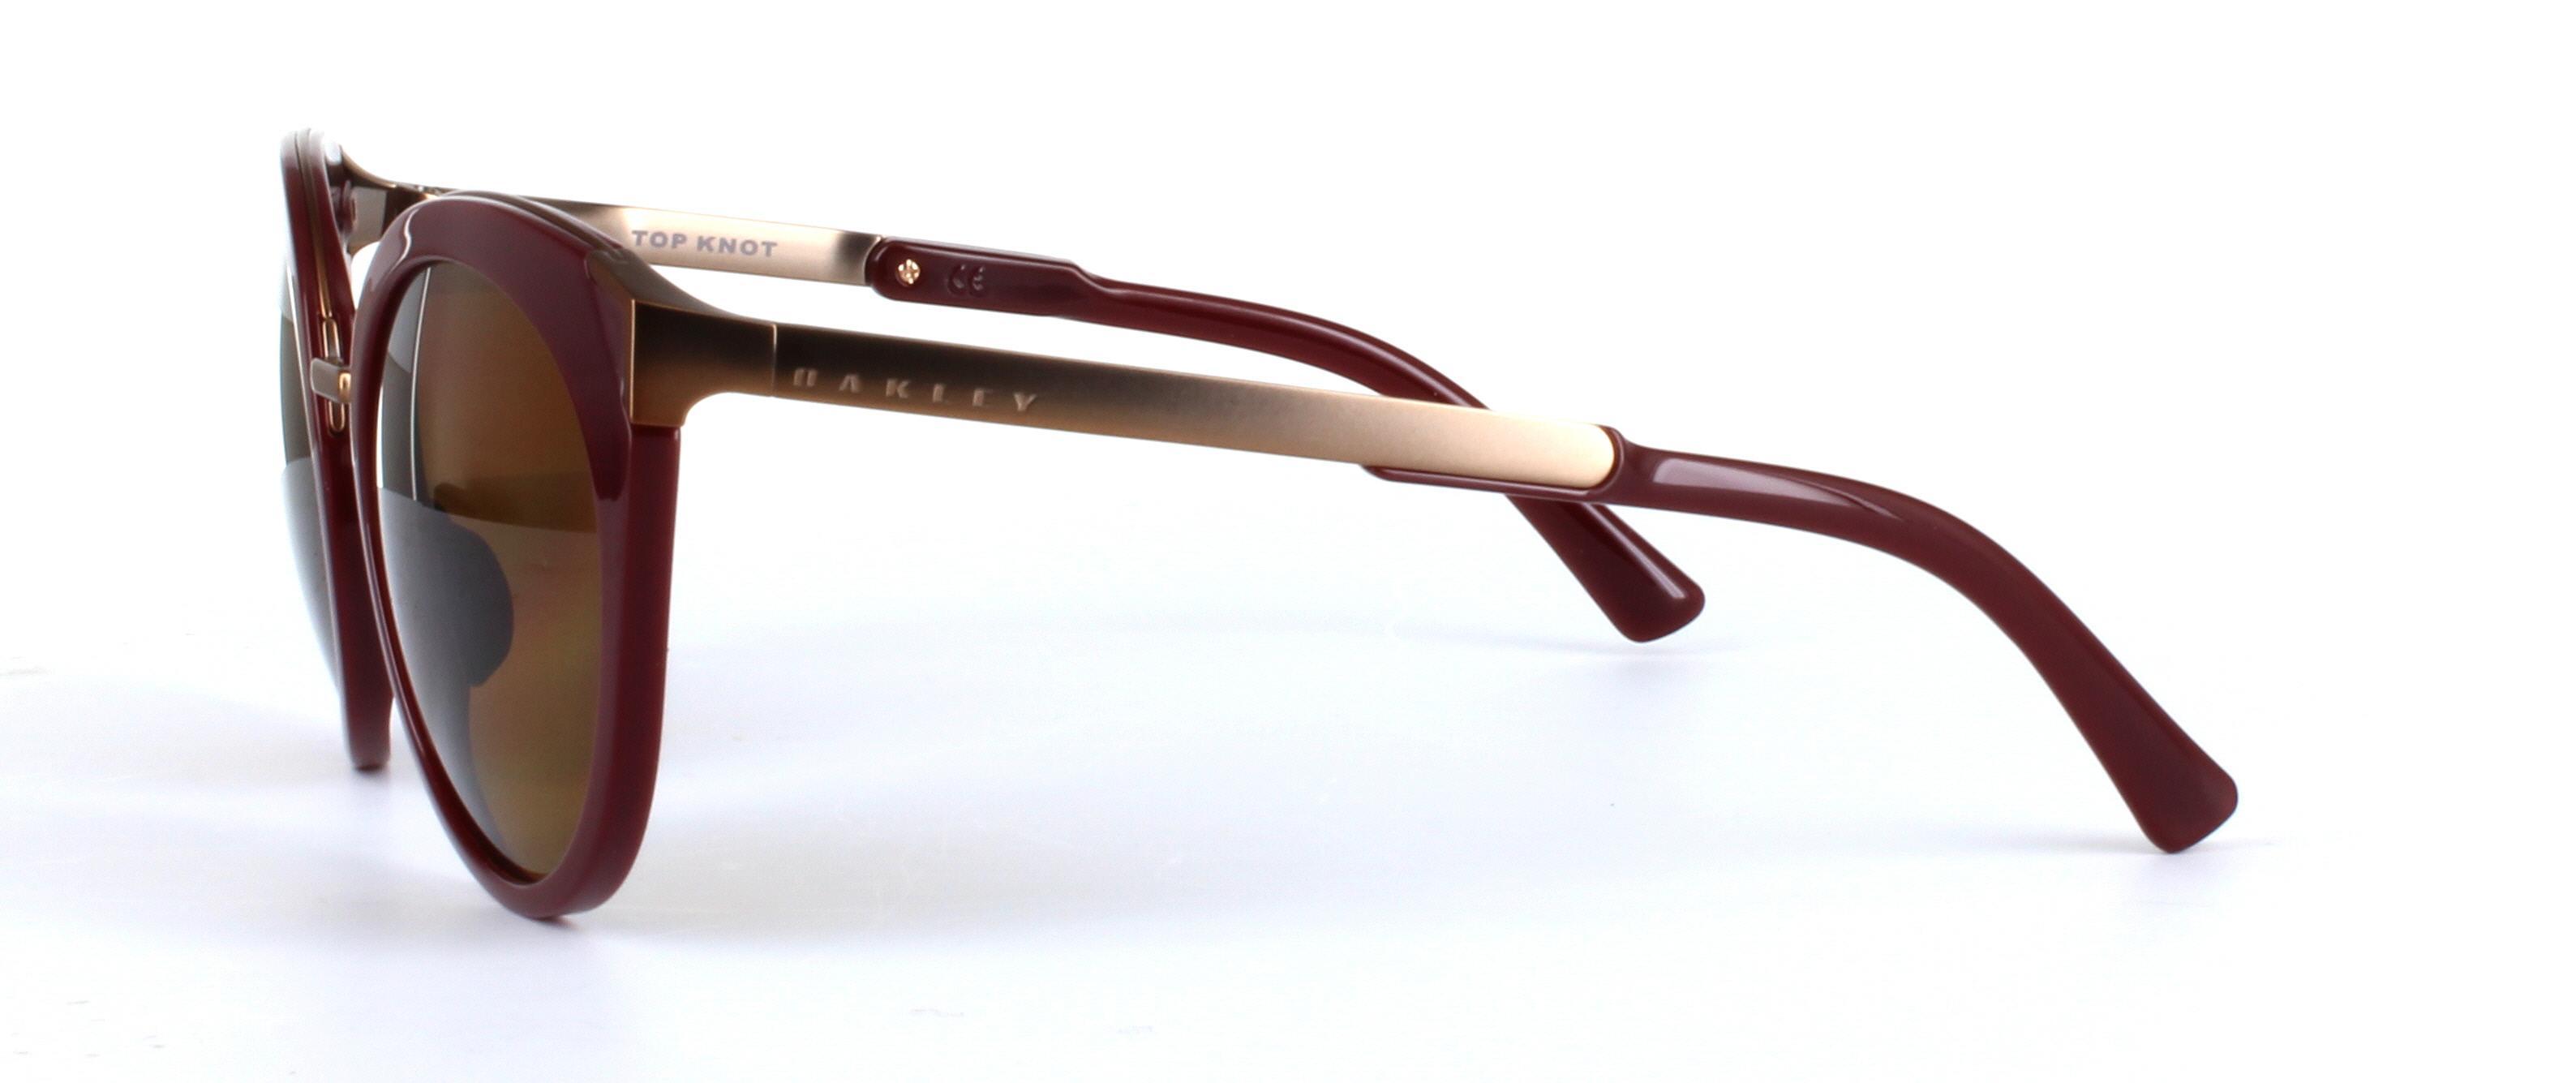 Oakley (O9434) Burgundy Full Rim Plastic Prescription Sunglasses - Image View 2